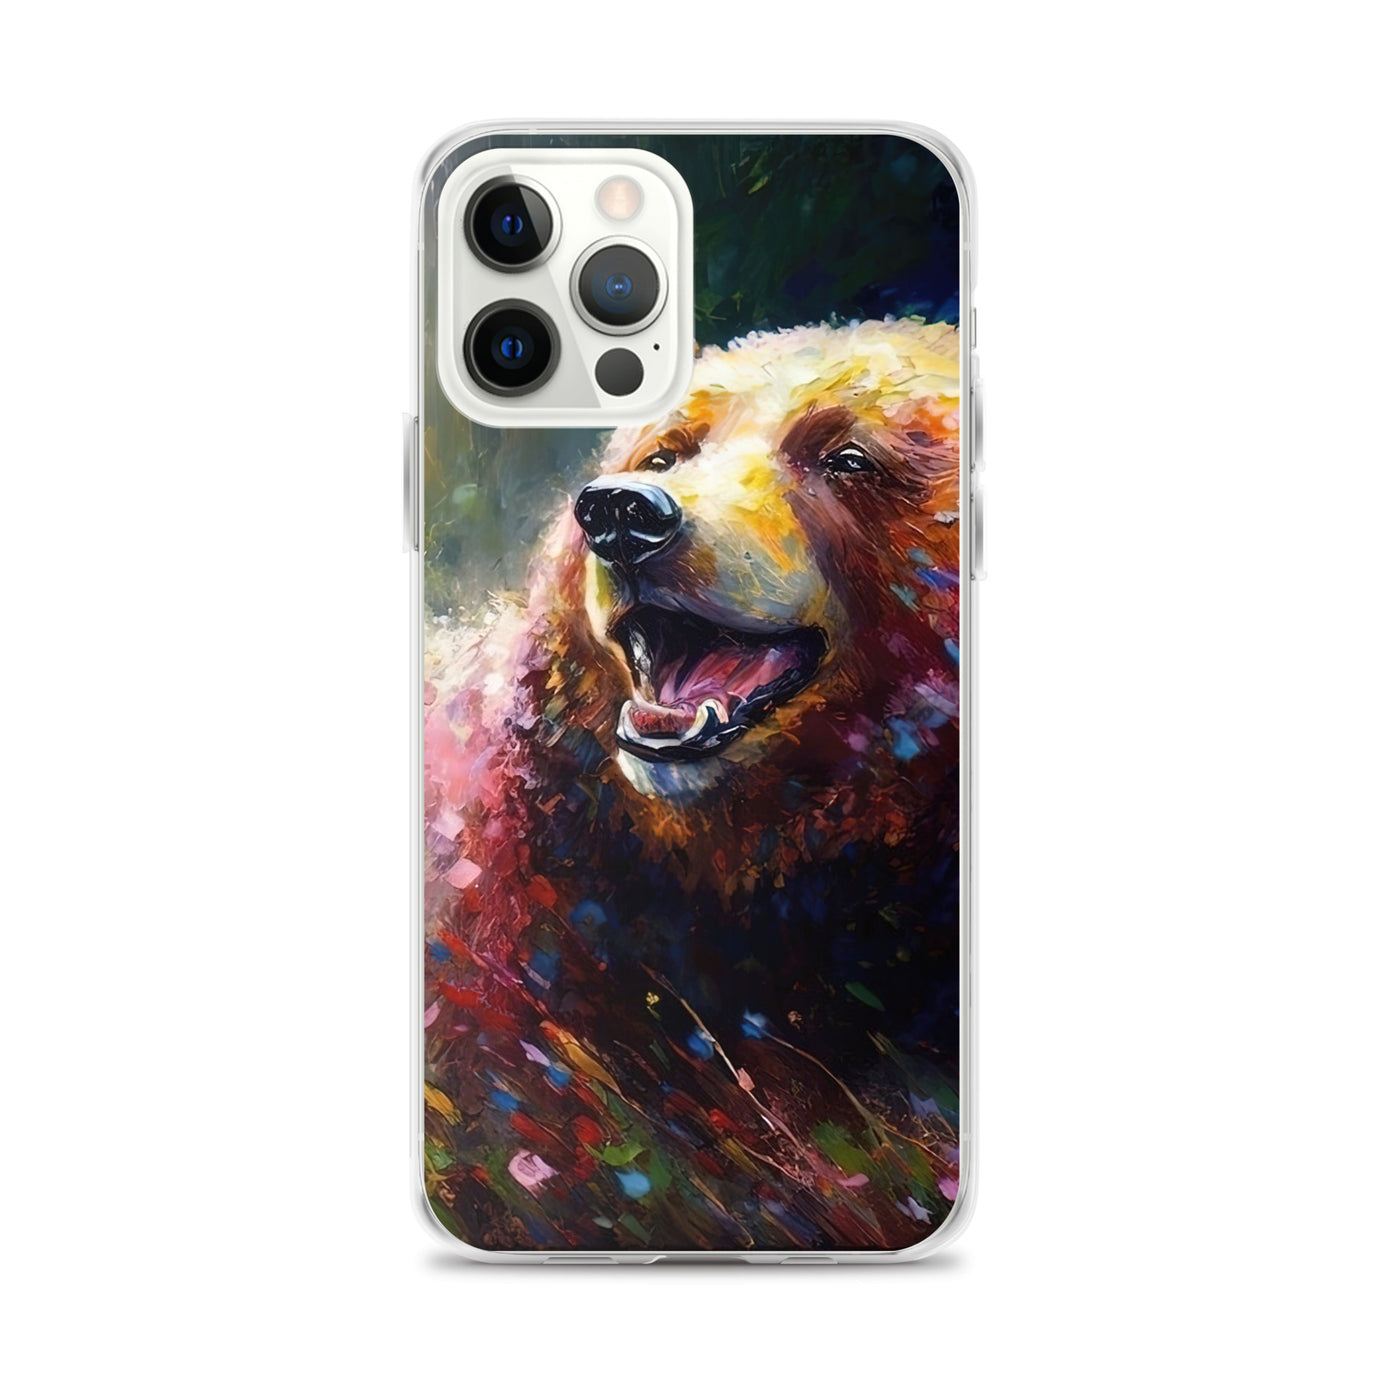 Süßer Bär - Ölmalerei - iPhone Schutzhülle (durchsichtig) camping xxx iPhone 12 Pro Max